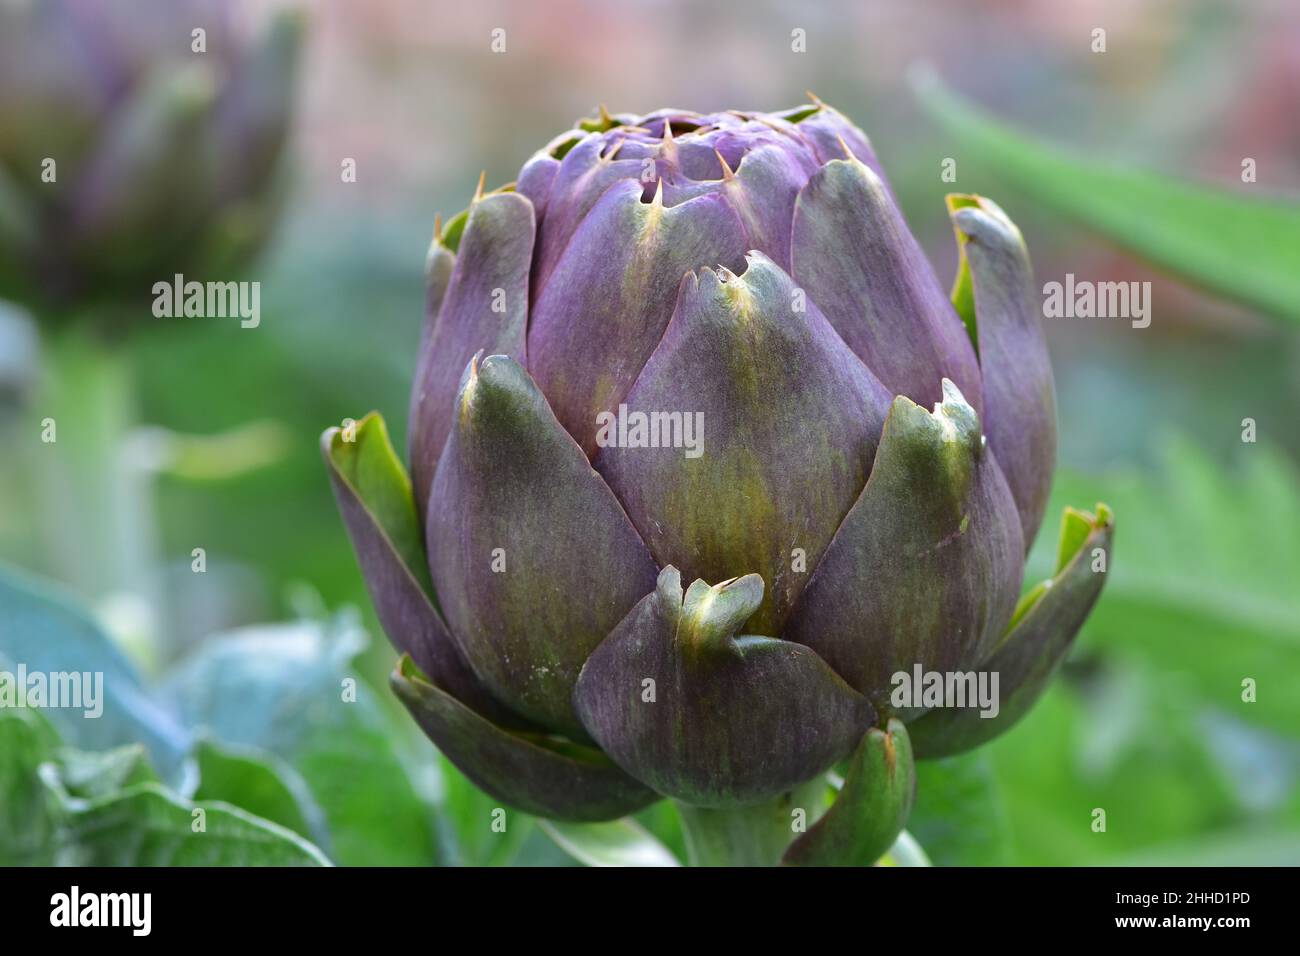 Detail view of artichoke flower bud showing purple florets. Stock Photo